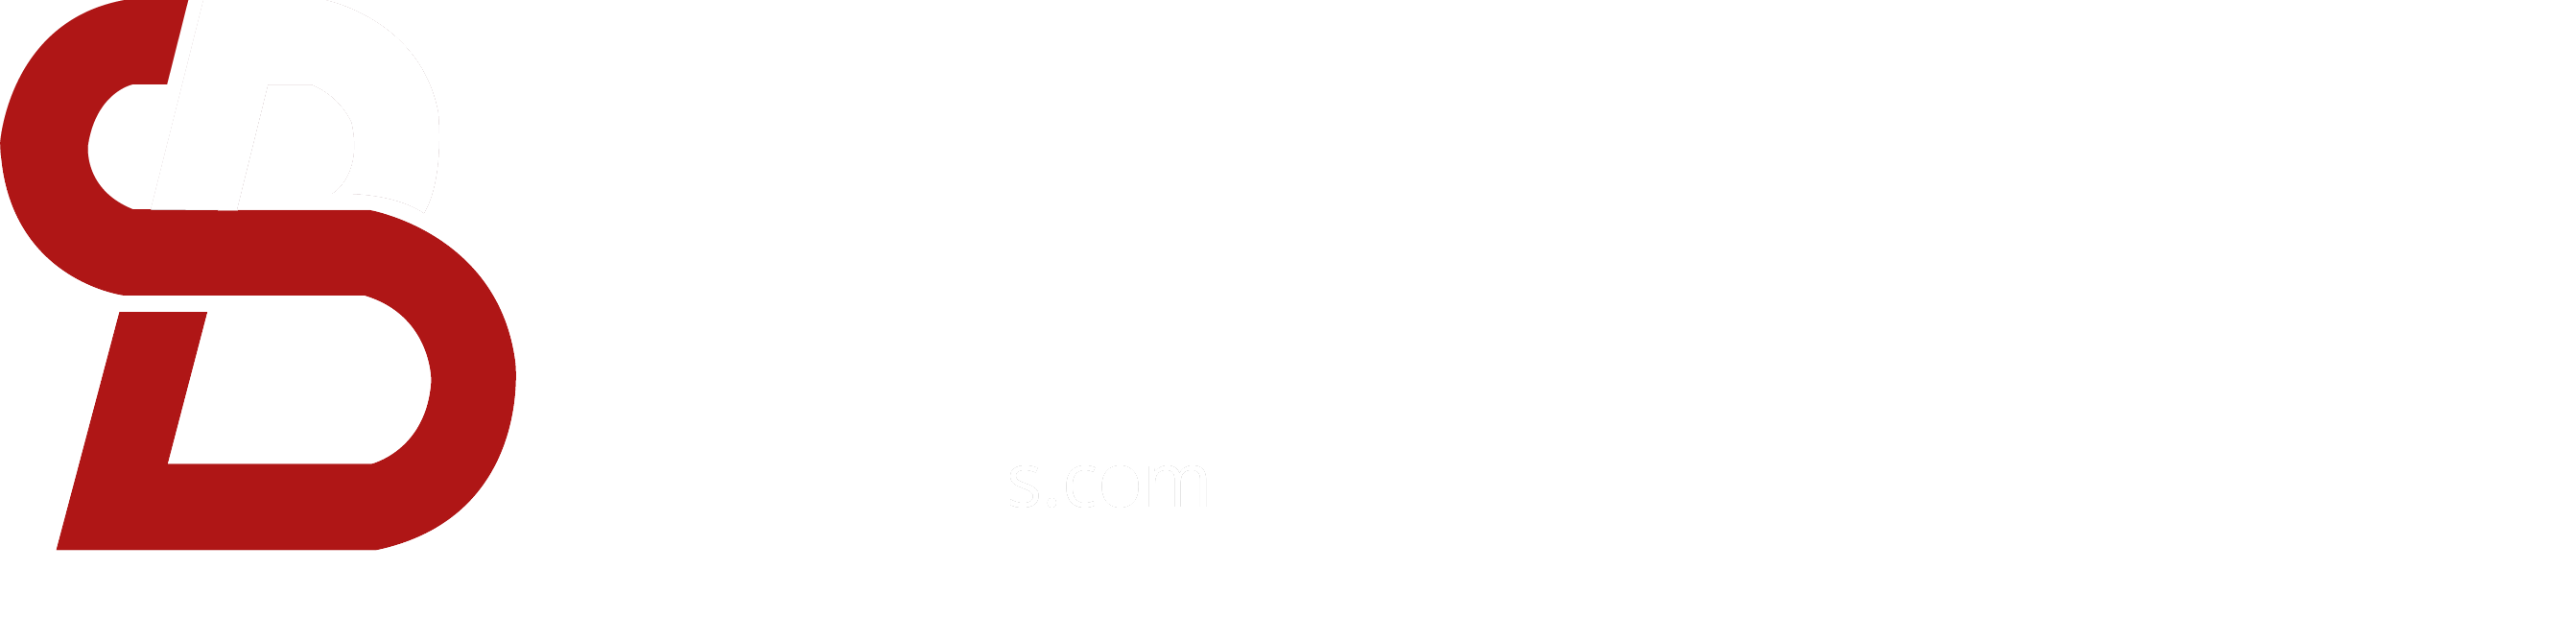 BawiSports